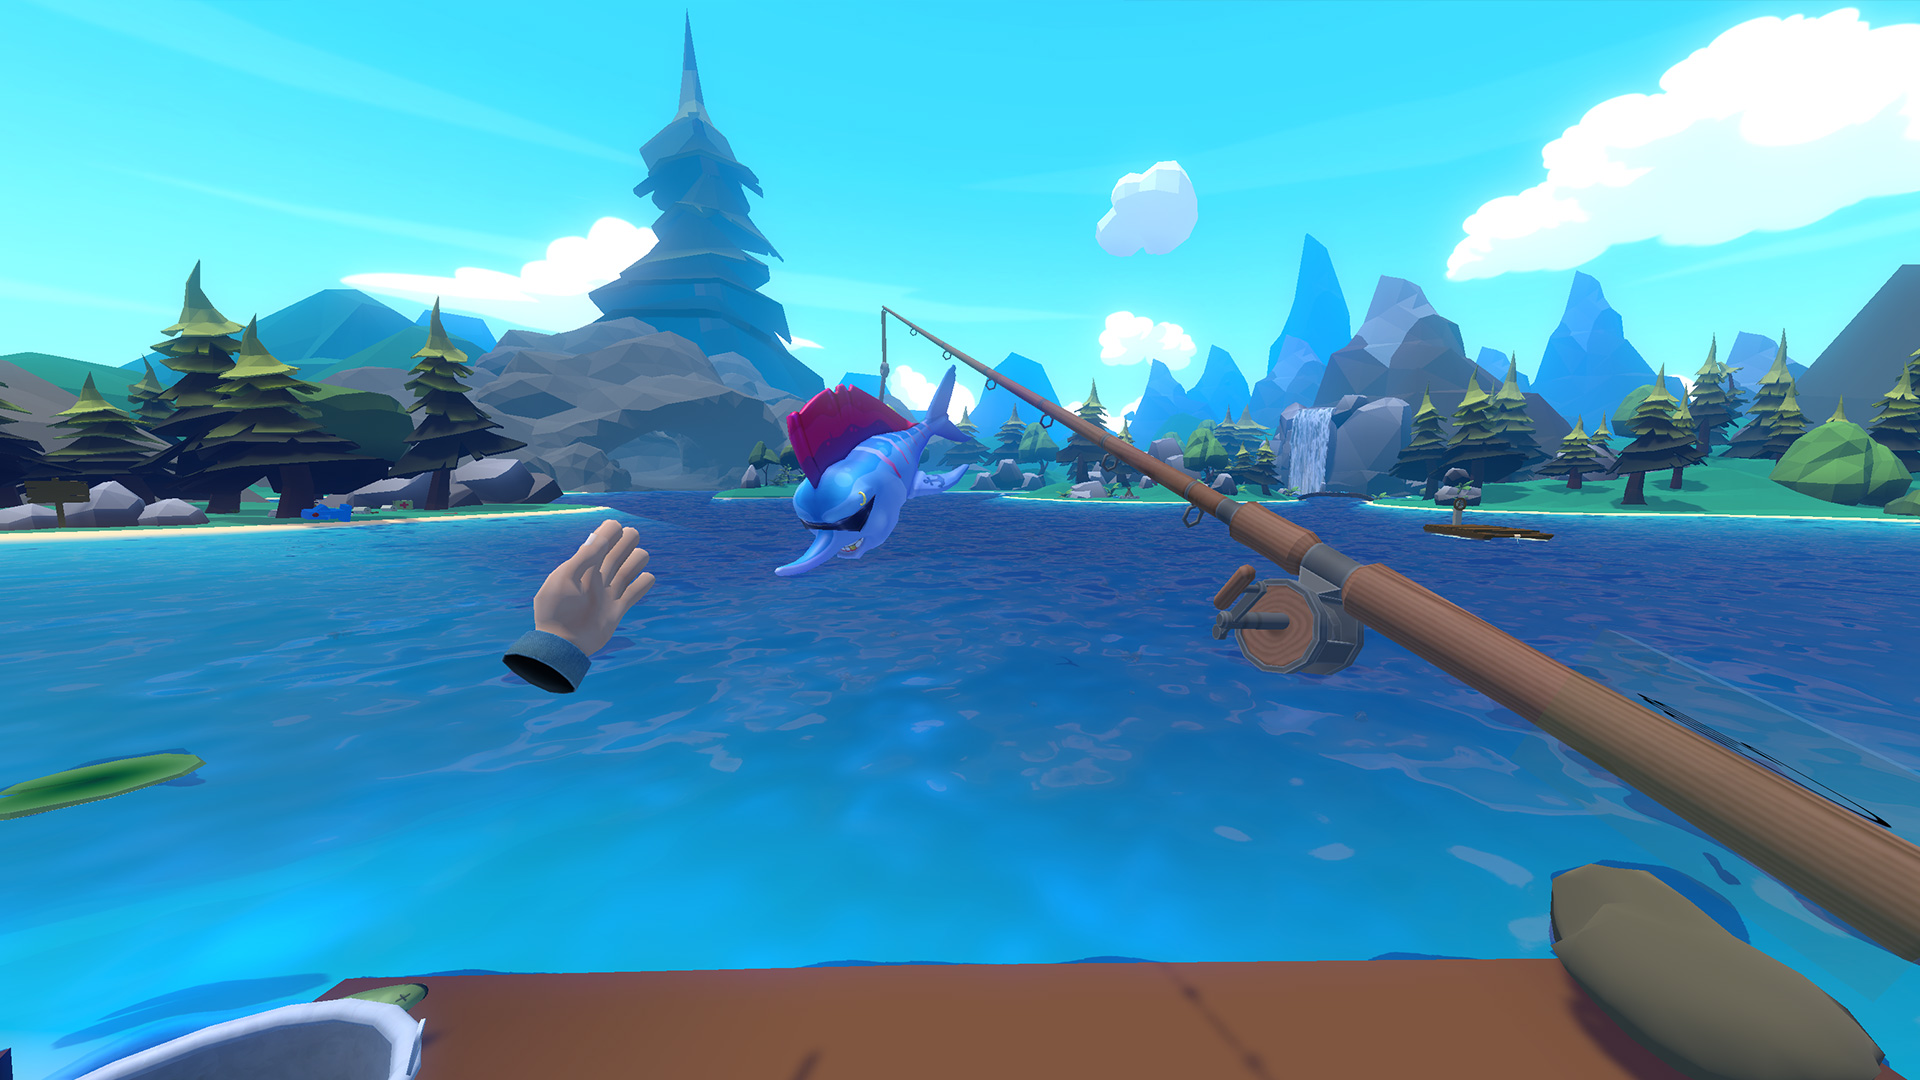 Игра Fishing Craze. Oculus Quest 2 рыбалка. Crazy Fish игра. Project: fishgame игра. Игры похожие на остров